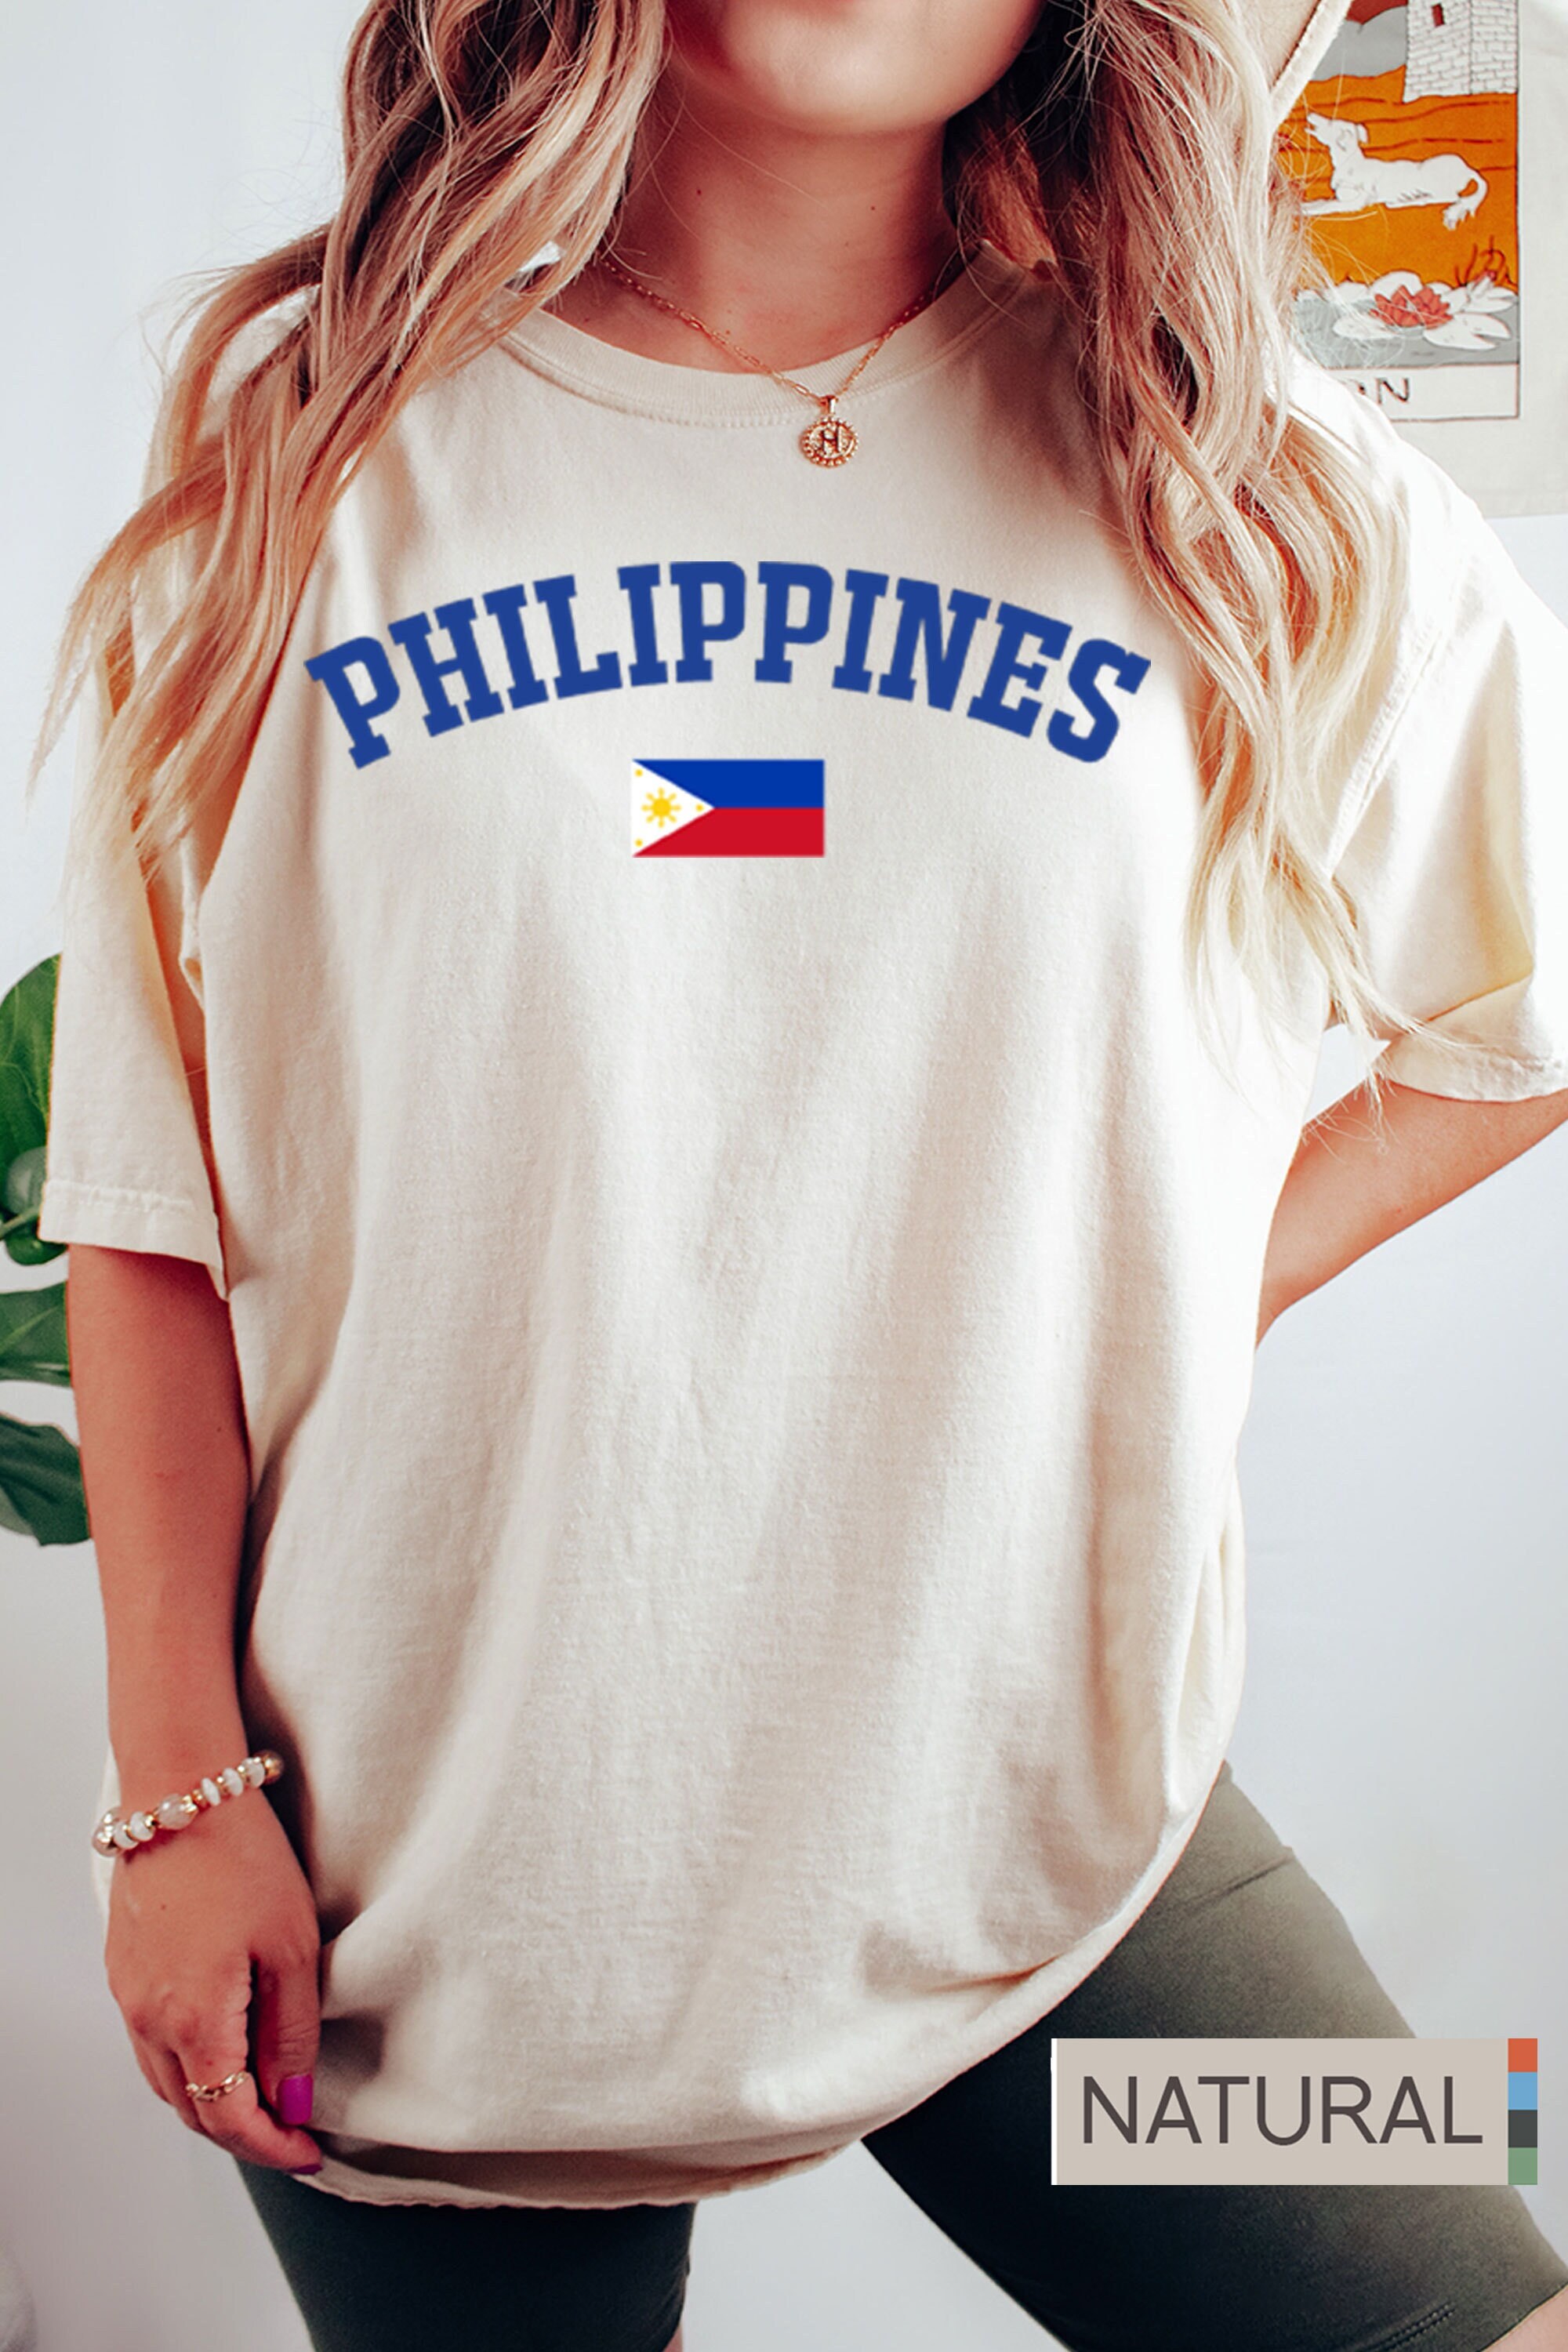 blessedpixel Pilipinas Design - Proud Pinoy Prints Long Sleeve T-Shirt